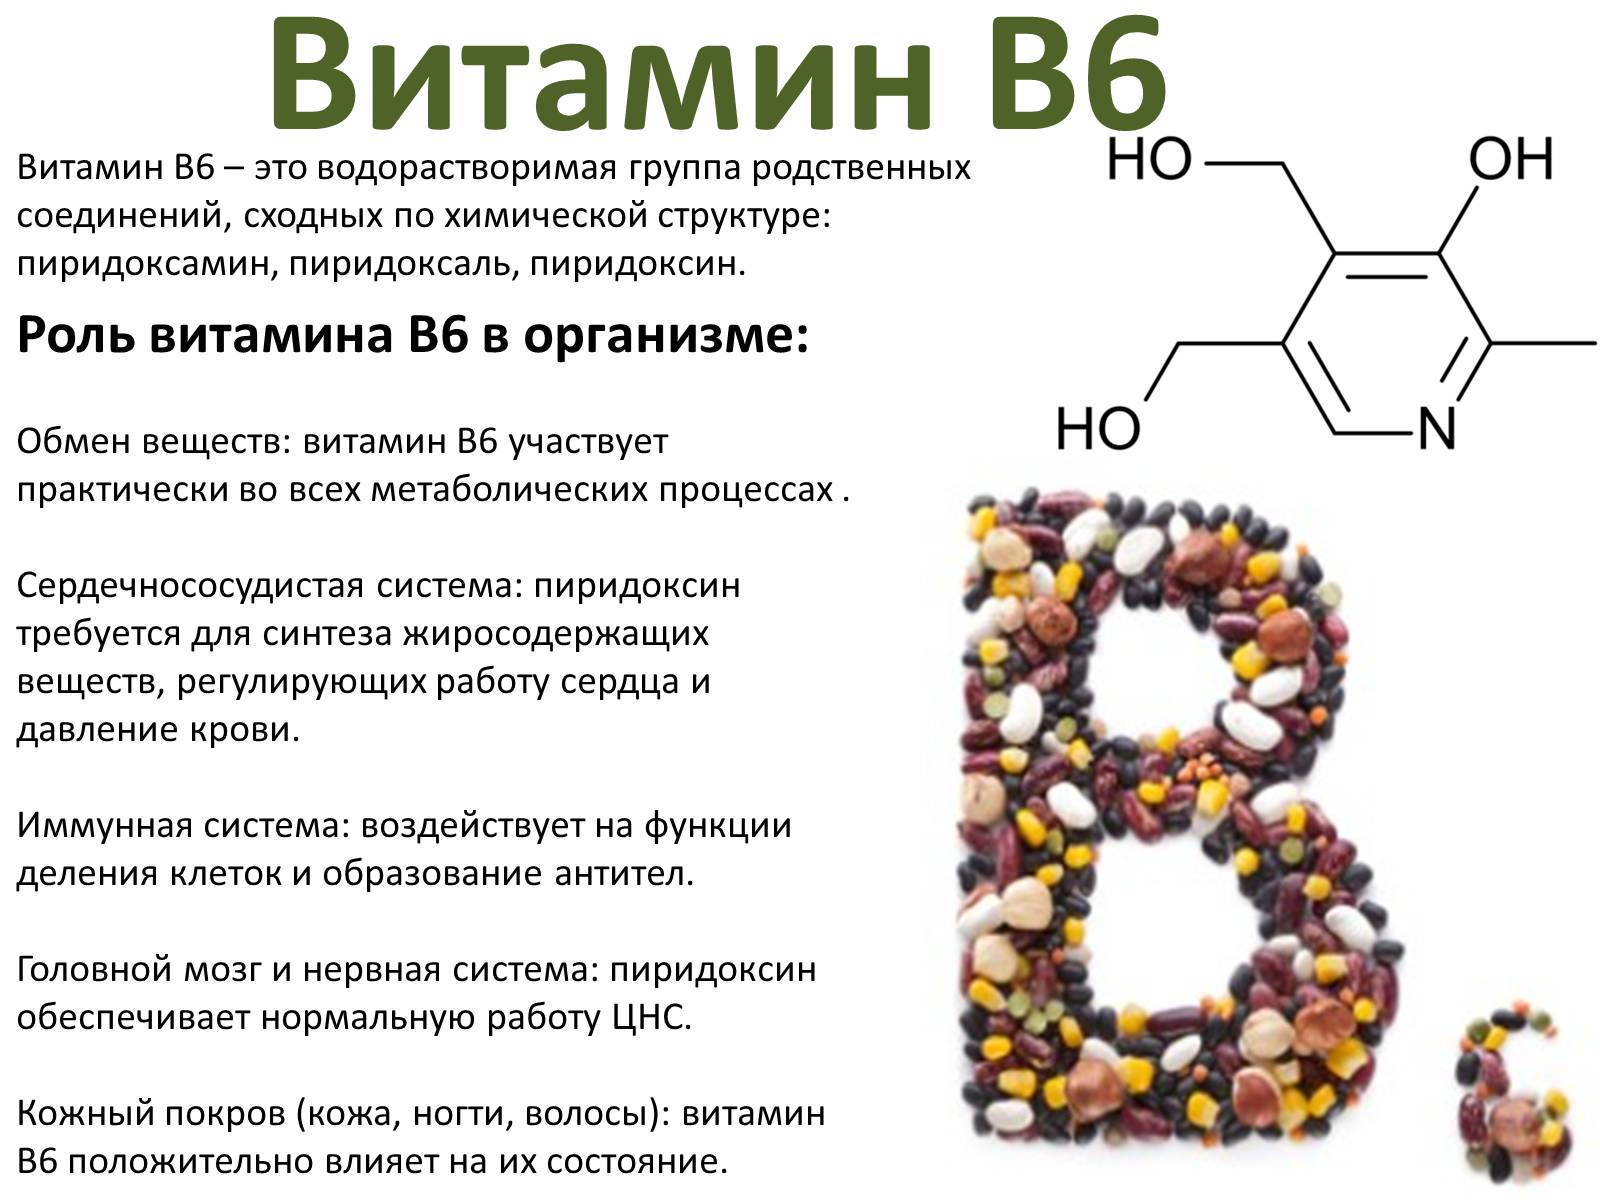 Витамин б при колите. Формула и роль витамина в6. Витамин в6 физиологическое название. Рибофлавин (витамин в12. Роль витамина b6 в организме человека.